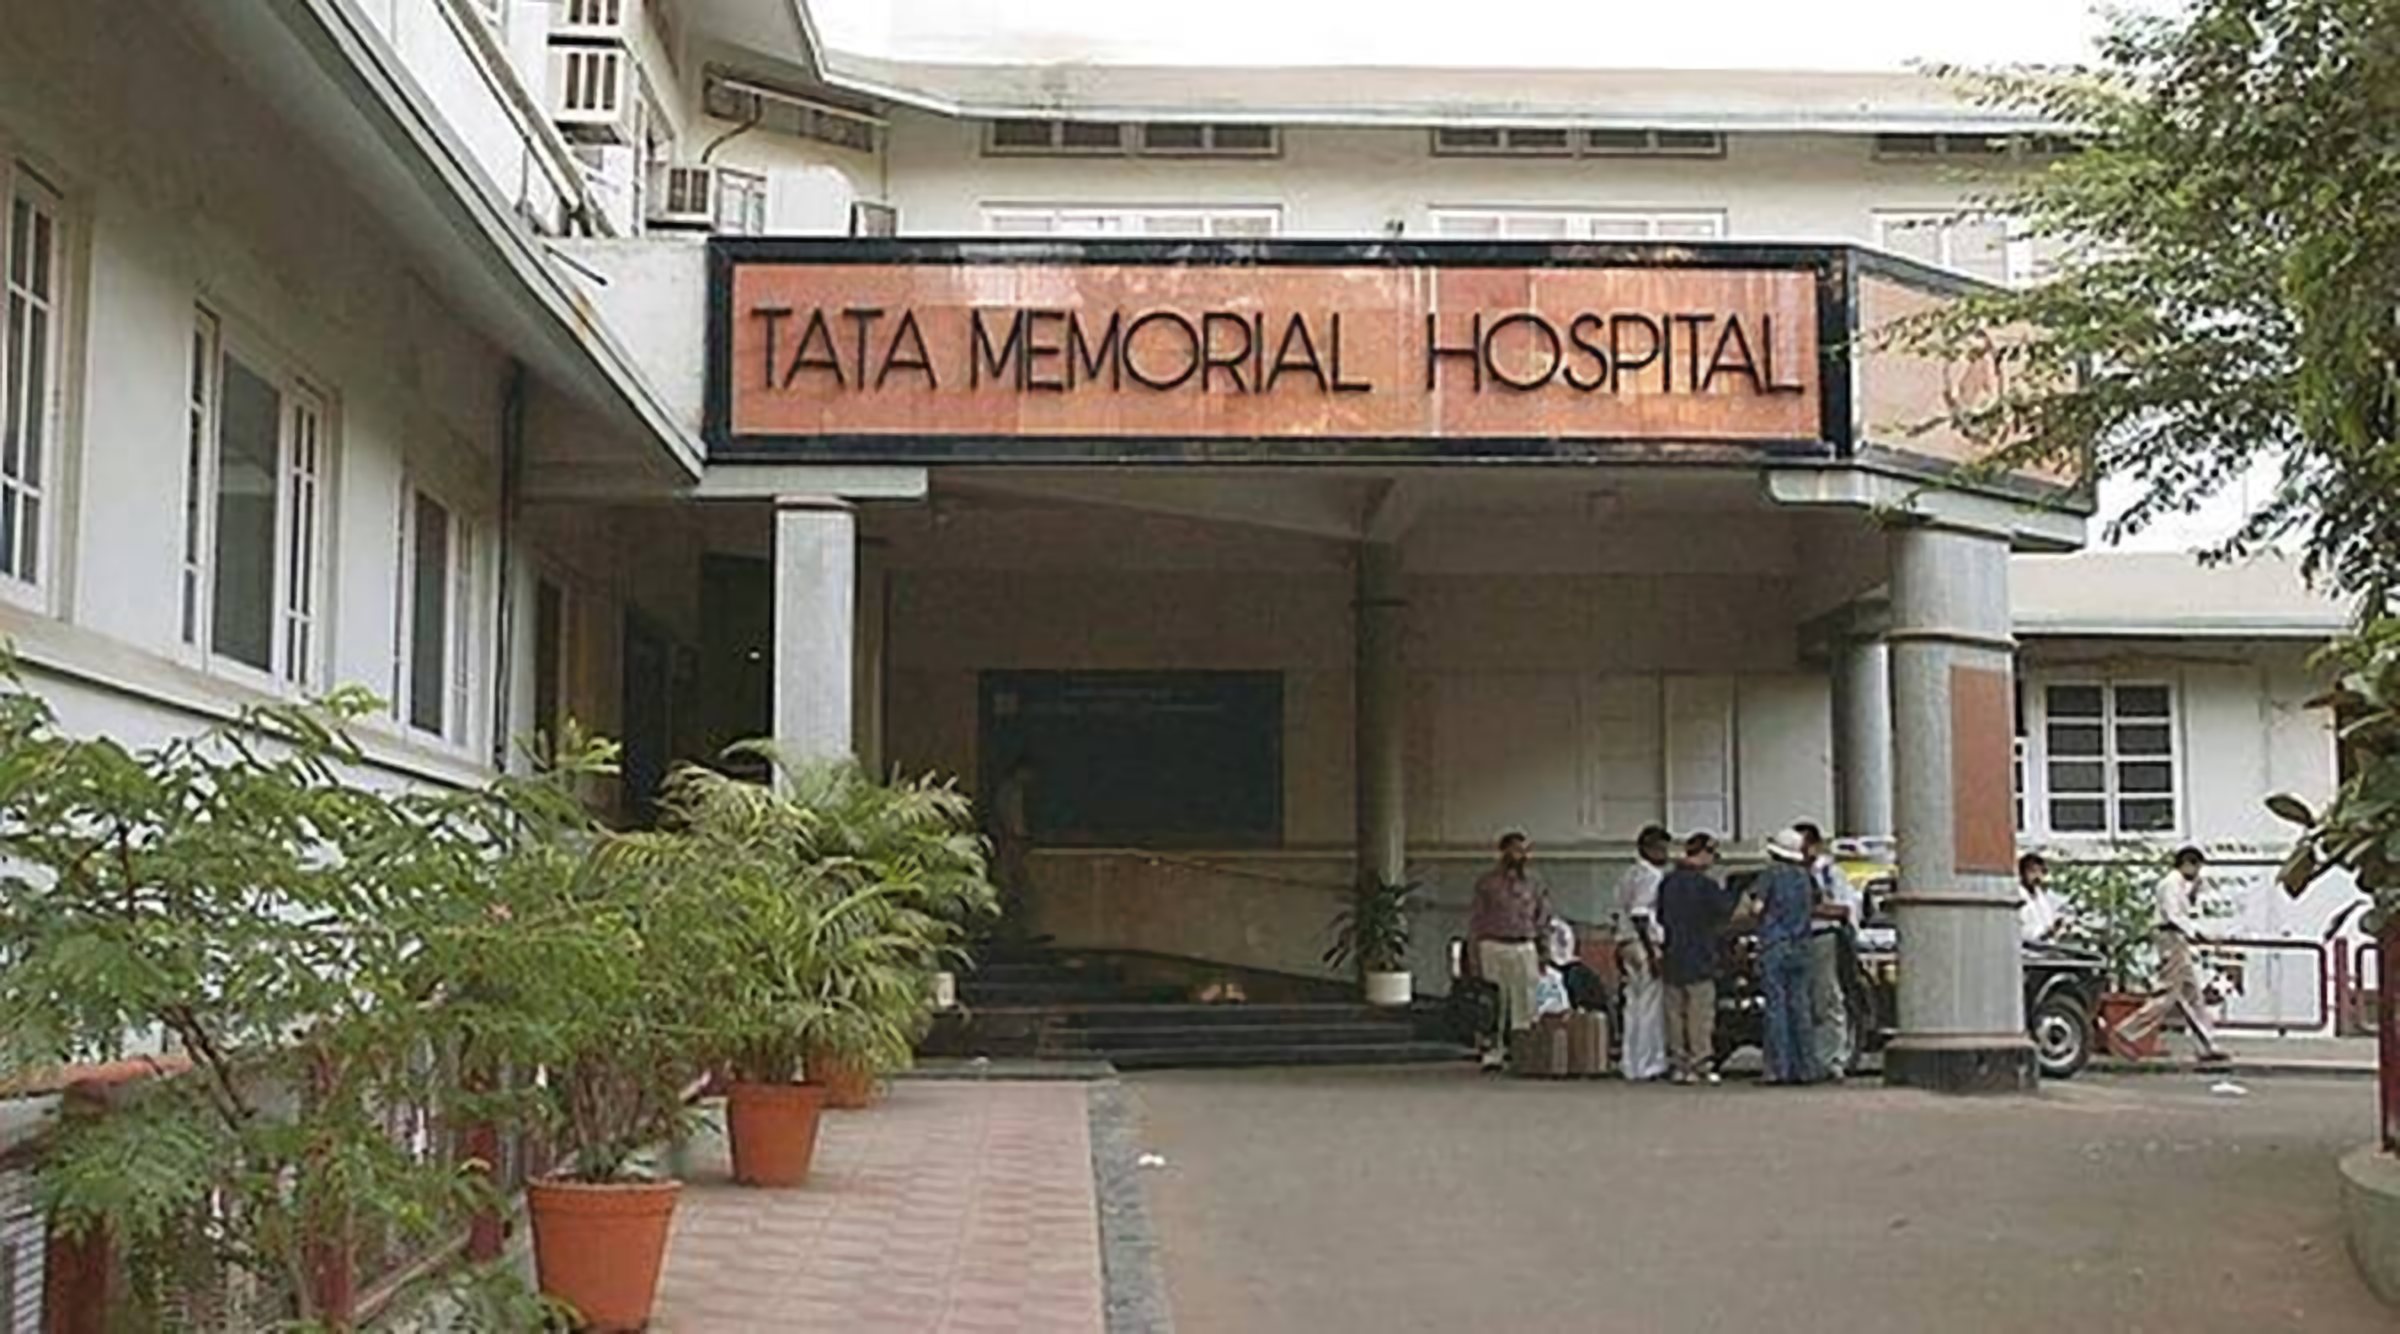 Tata Memorial Hospital photo